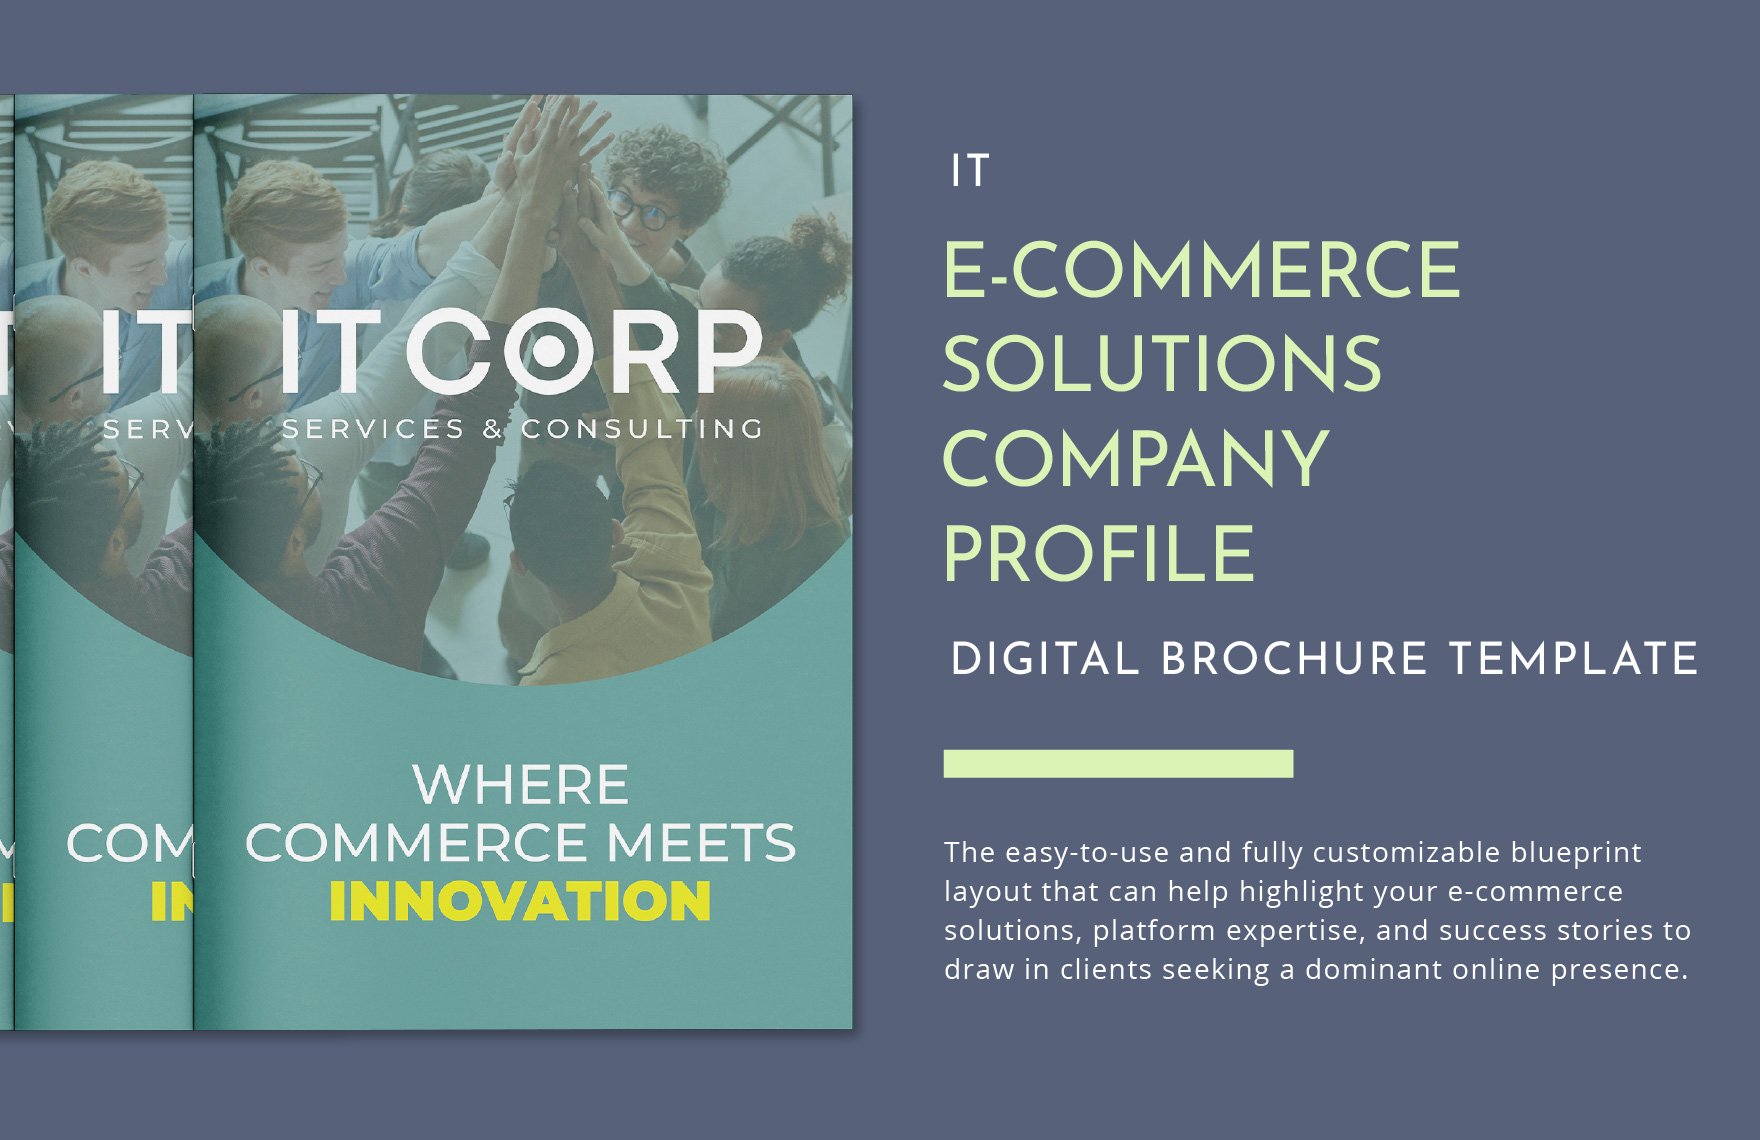 IT E-Commerce Solutions Company Profile Digital Brochure Template in Word, Illustrator, PSD